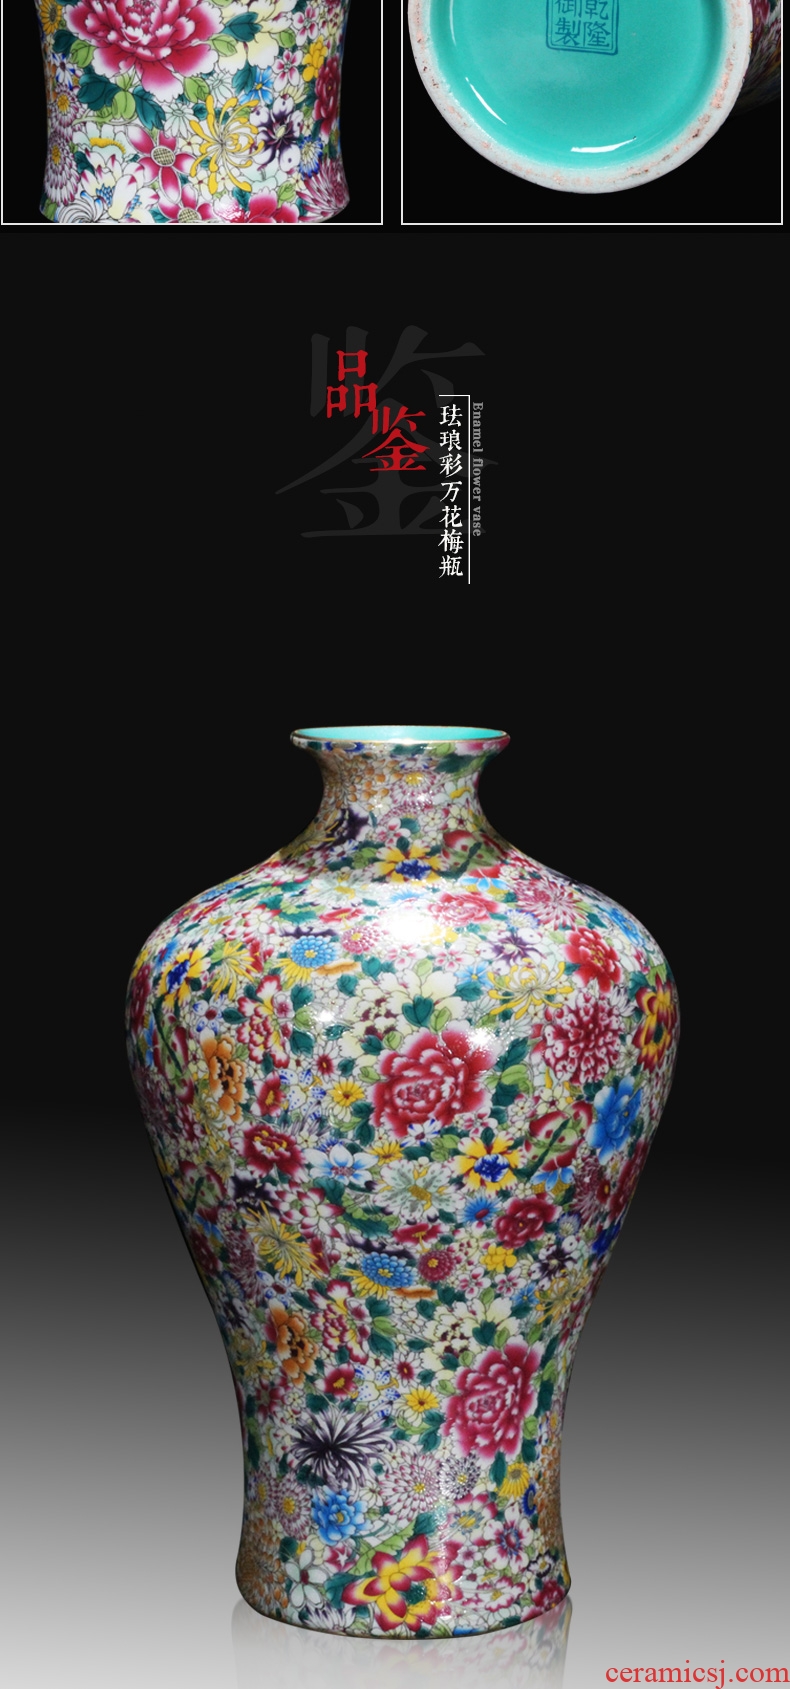 Antique Chinese jingdezhen ceramics vase powder enamel enamel vase decoration home decoration handicraft furnishing articles